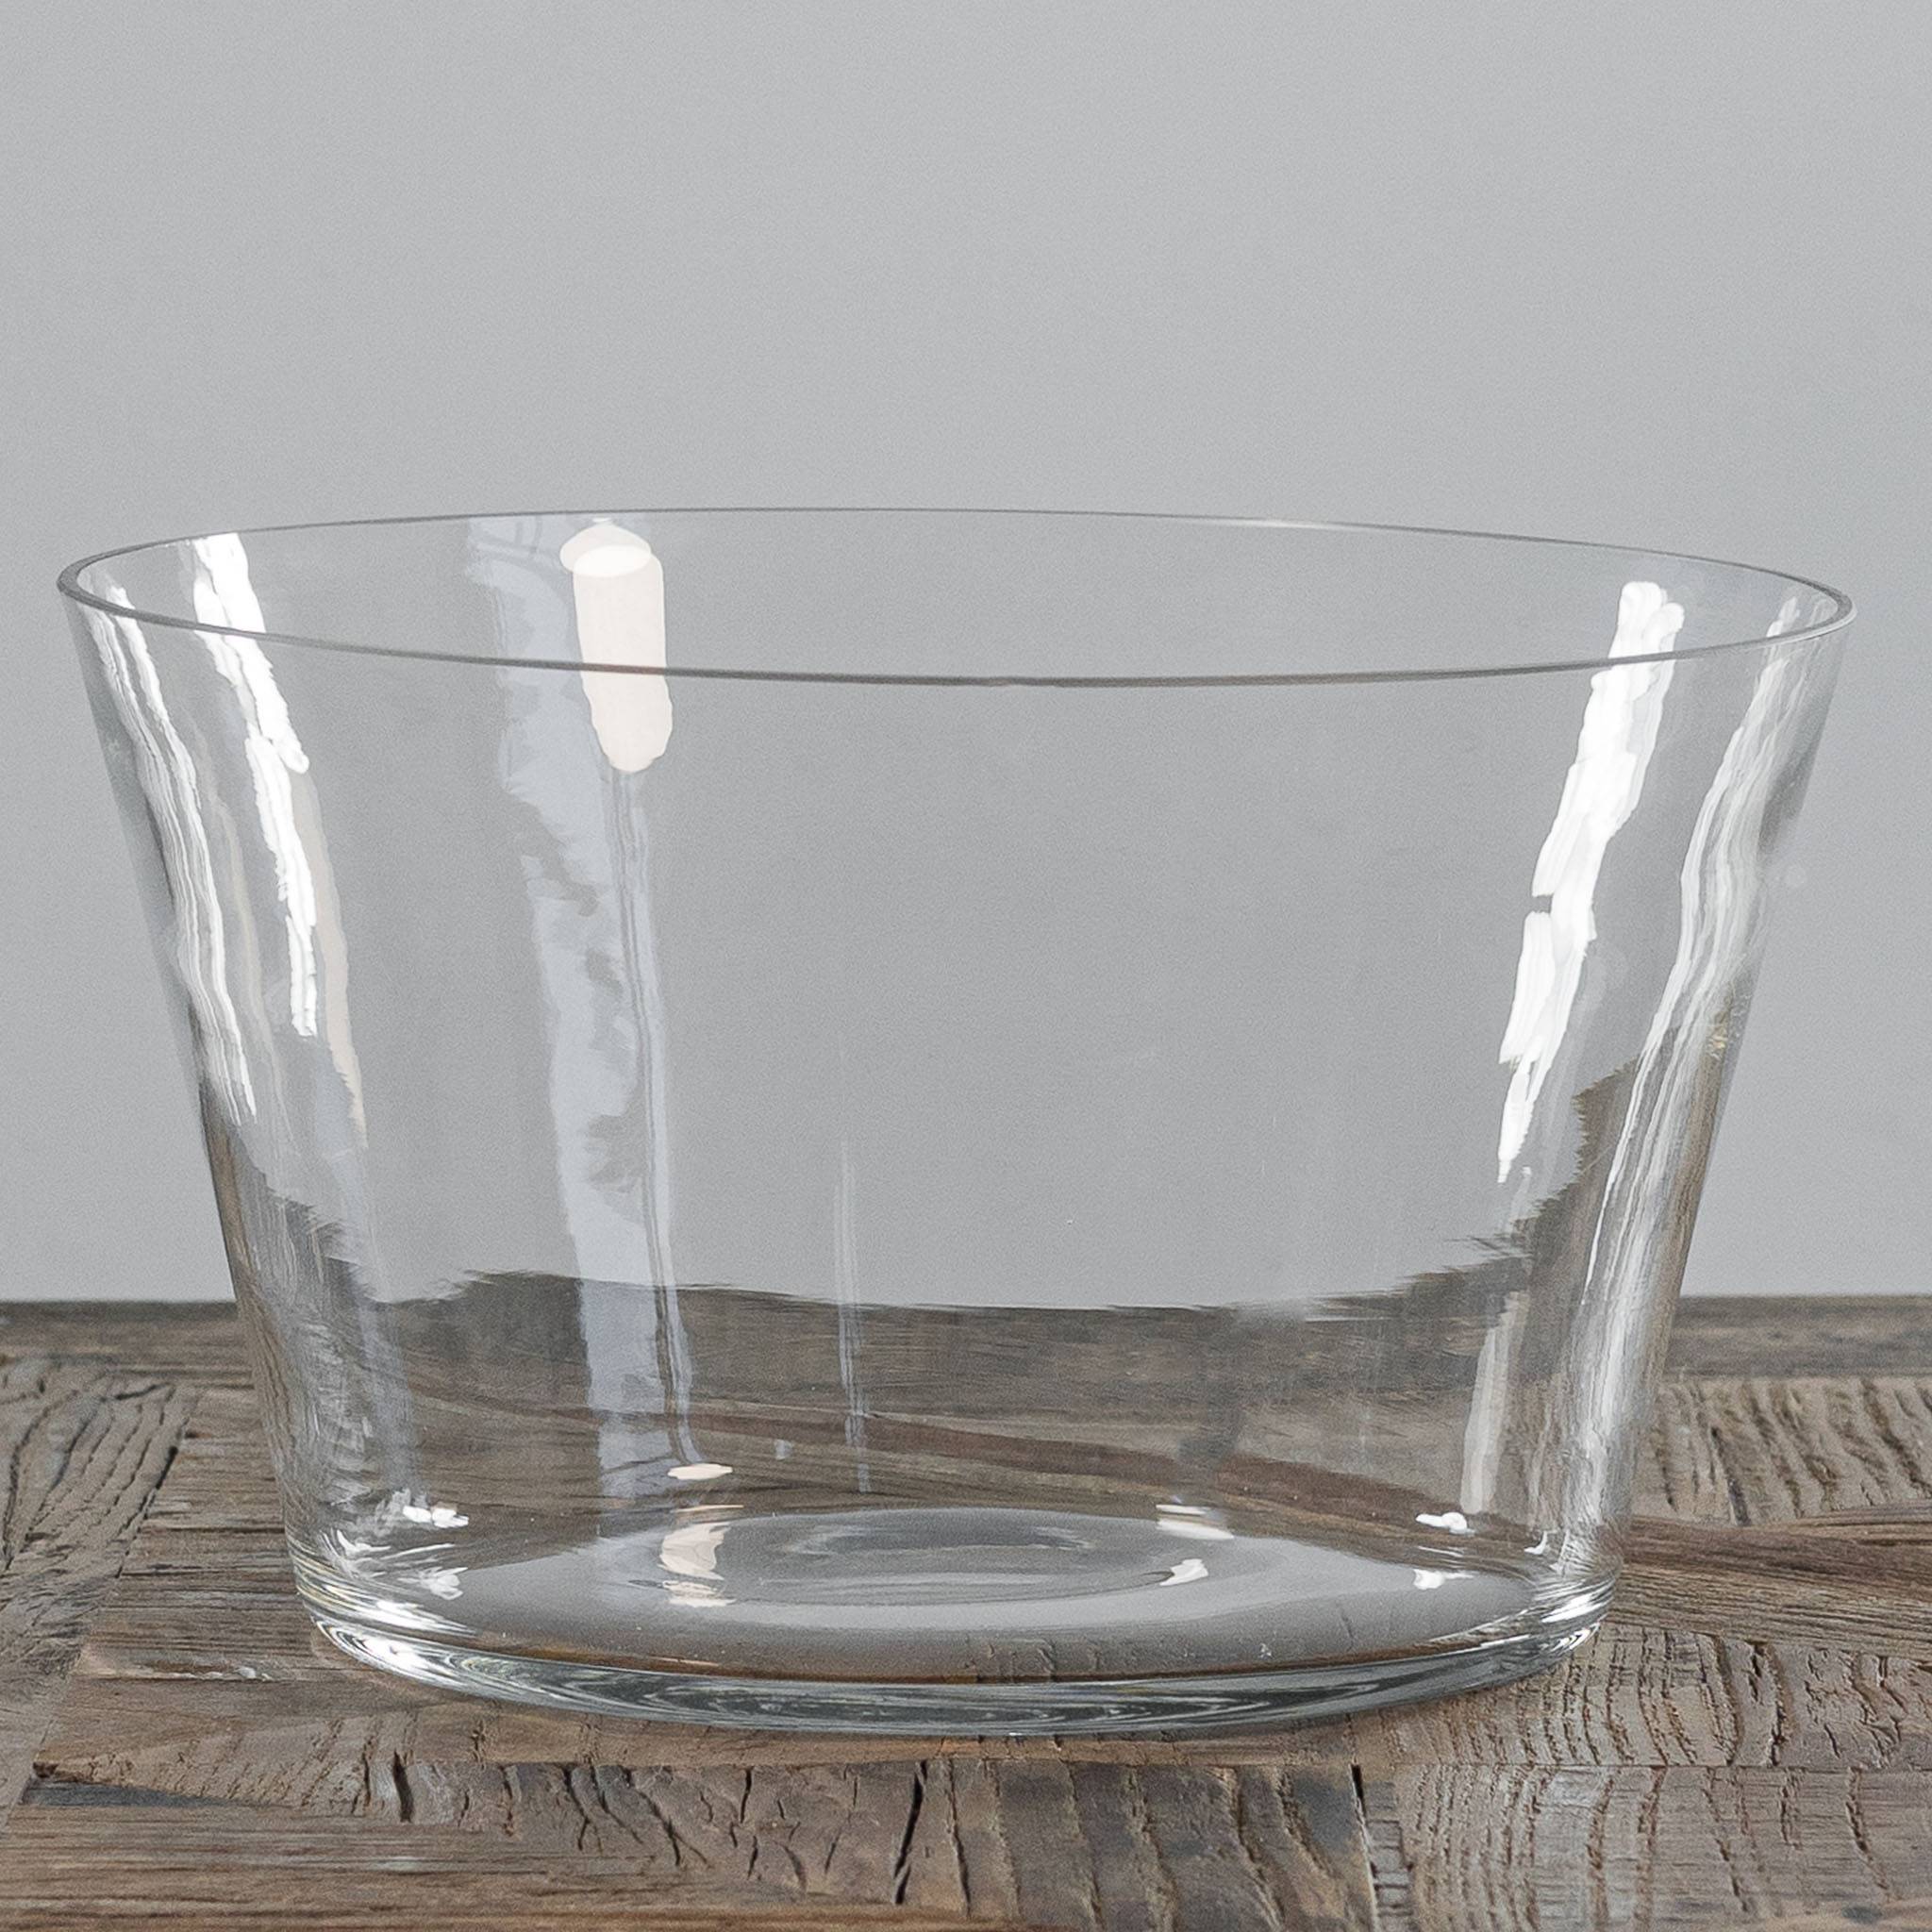 Transparent glass cup